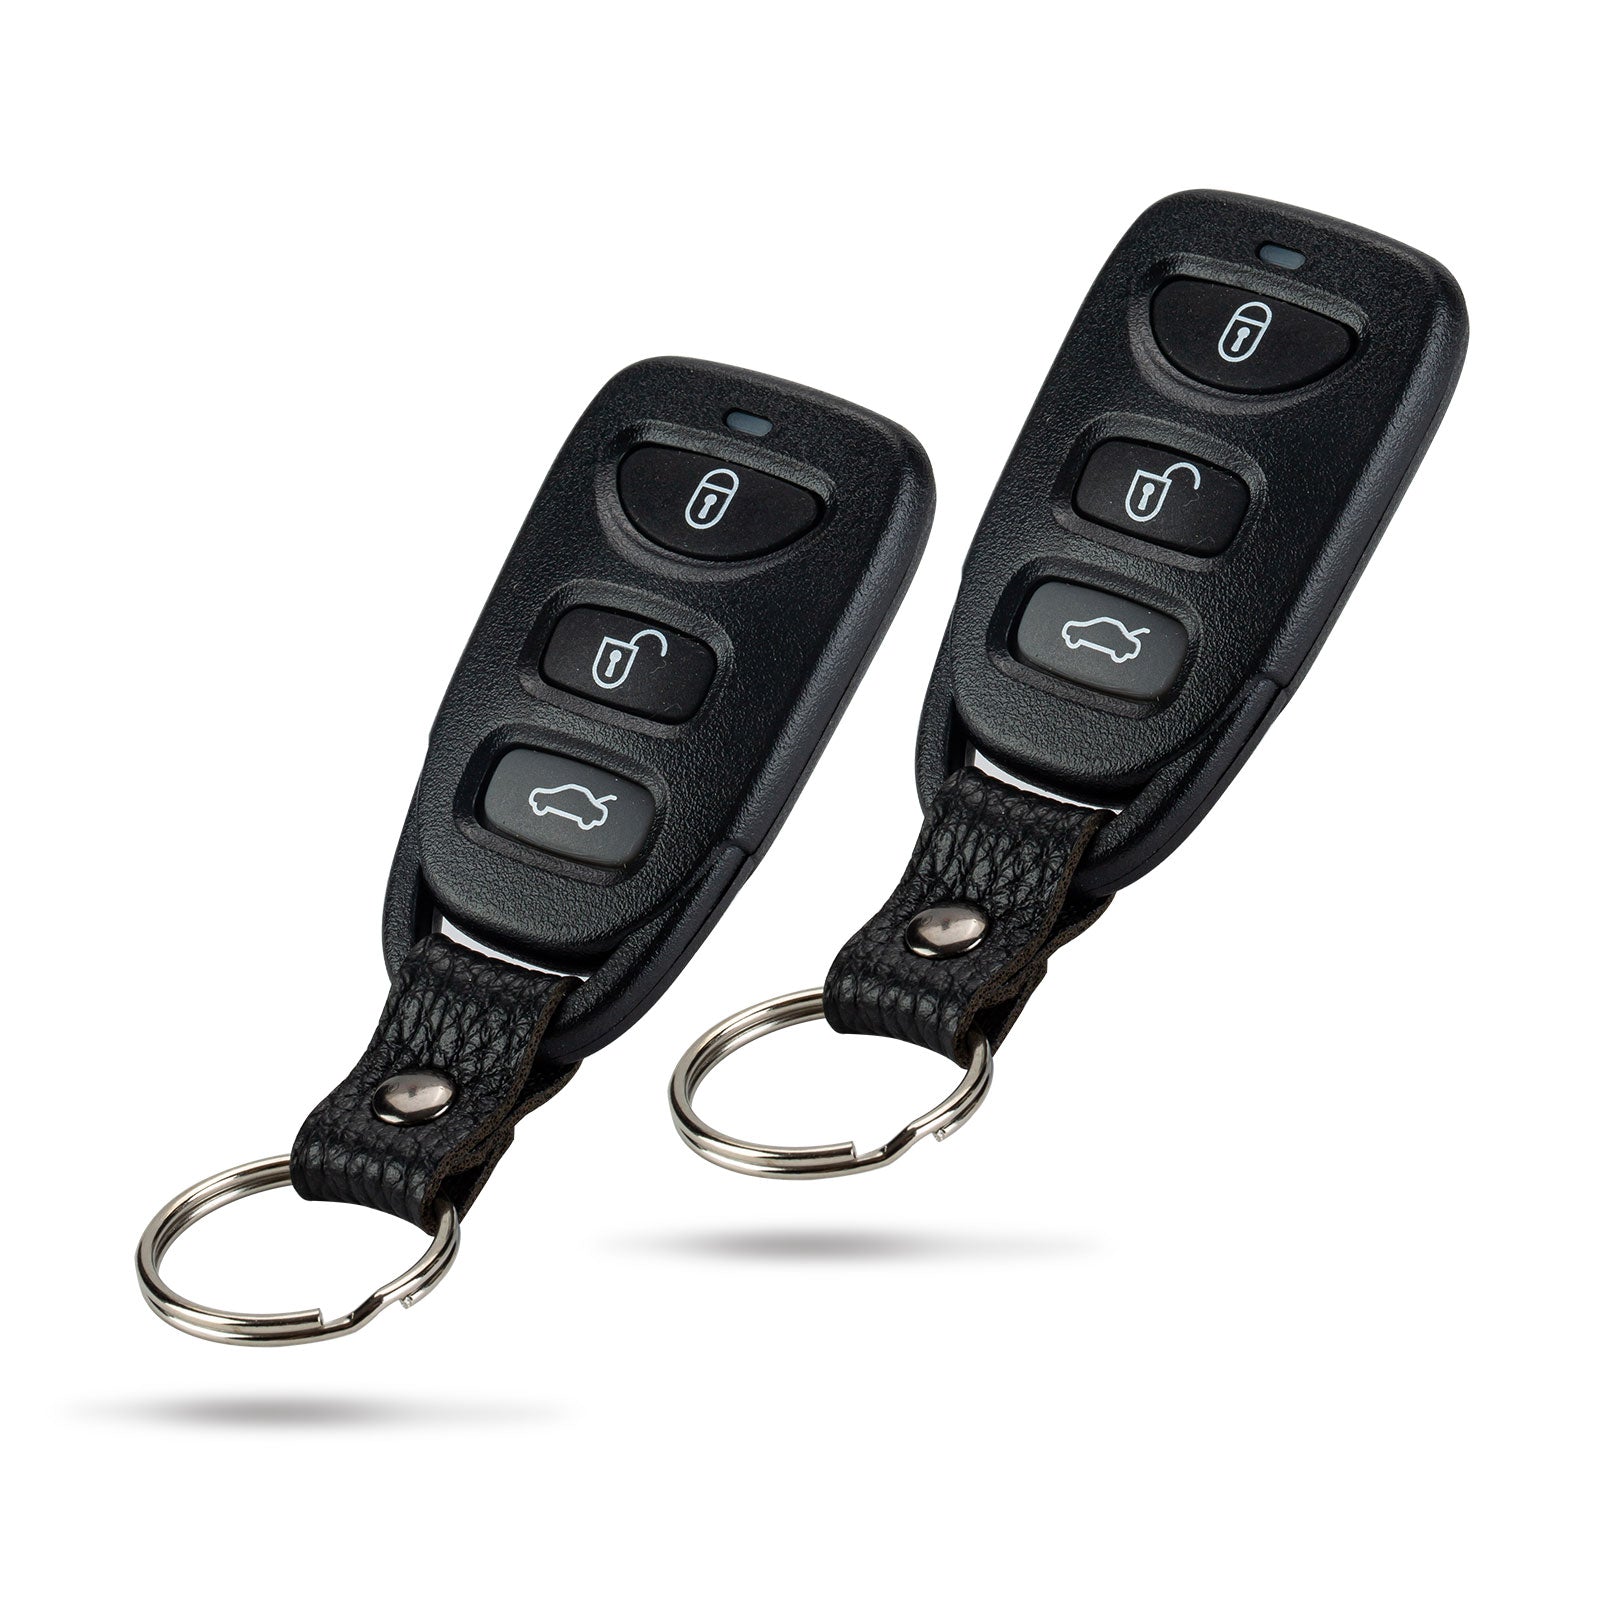 Extra-Partss Remote Car Key Fob Replacement for Hyundai OSLOKA-950T fits 2011 2012 2013 2014 Sonata